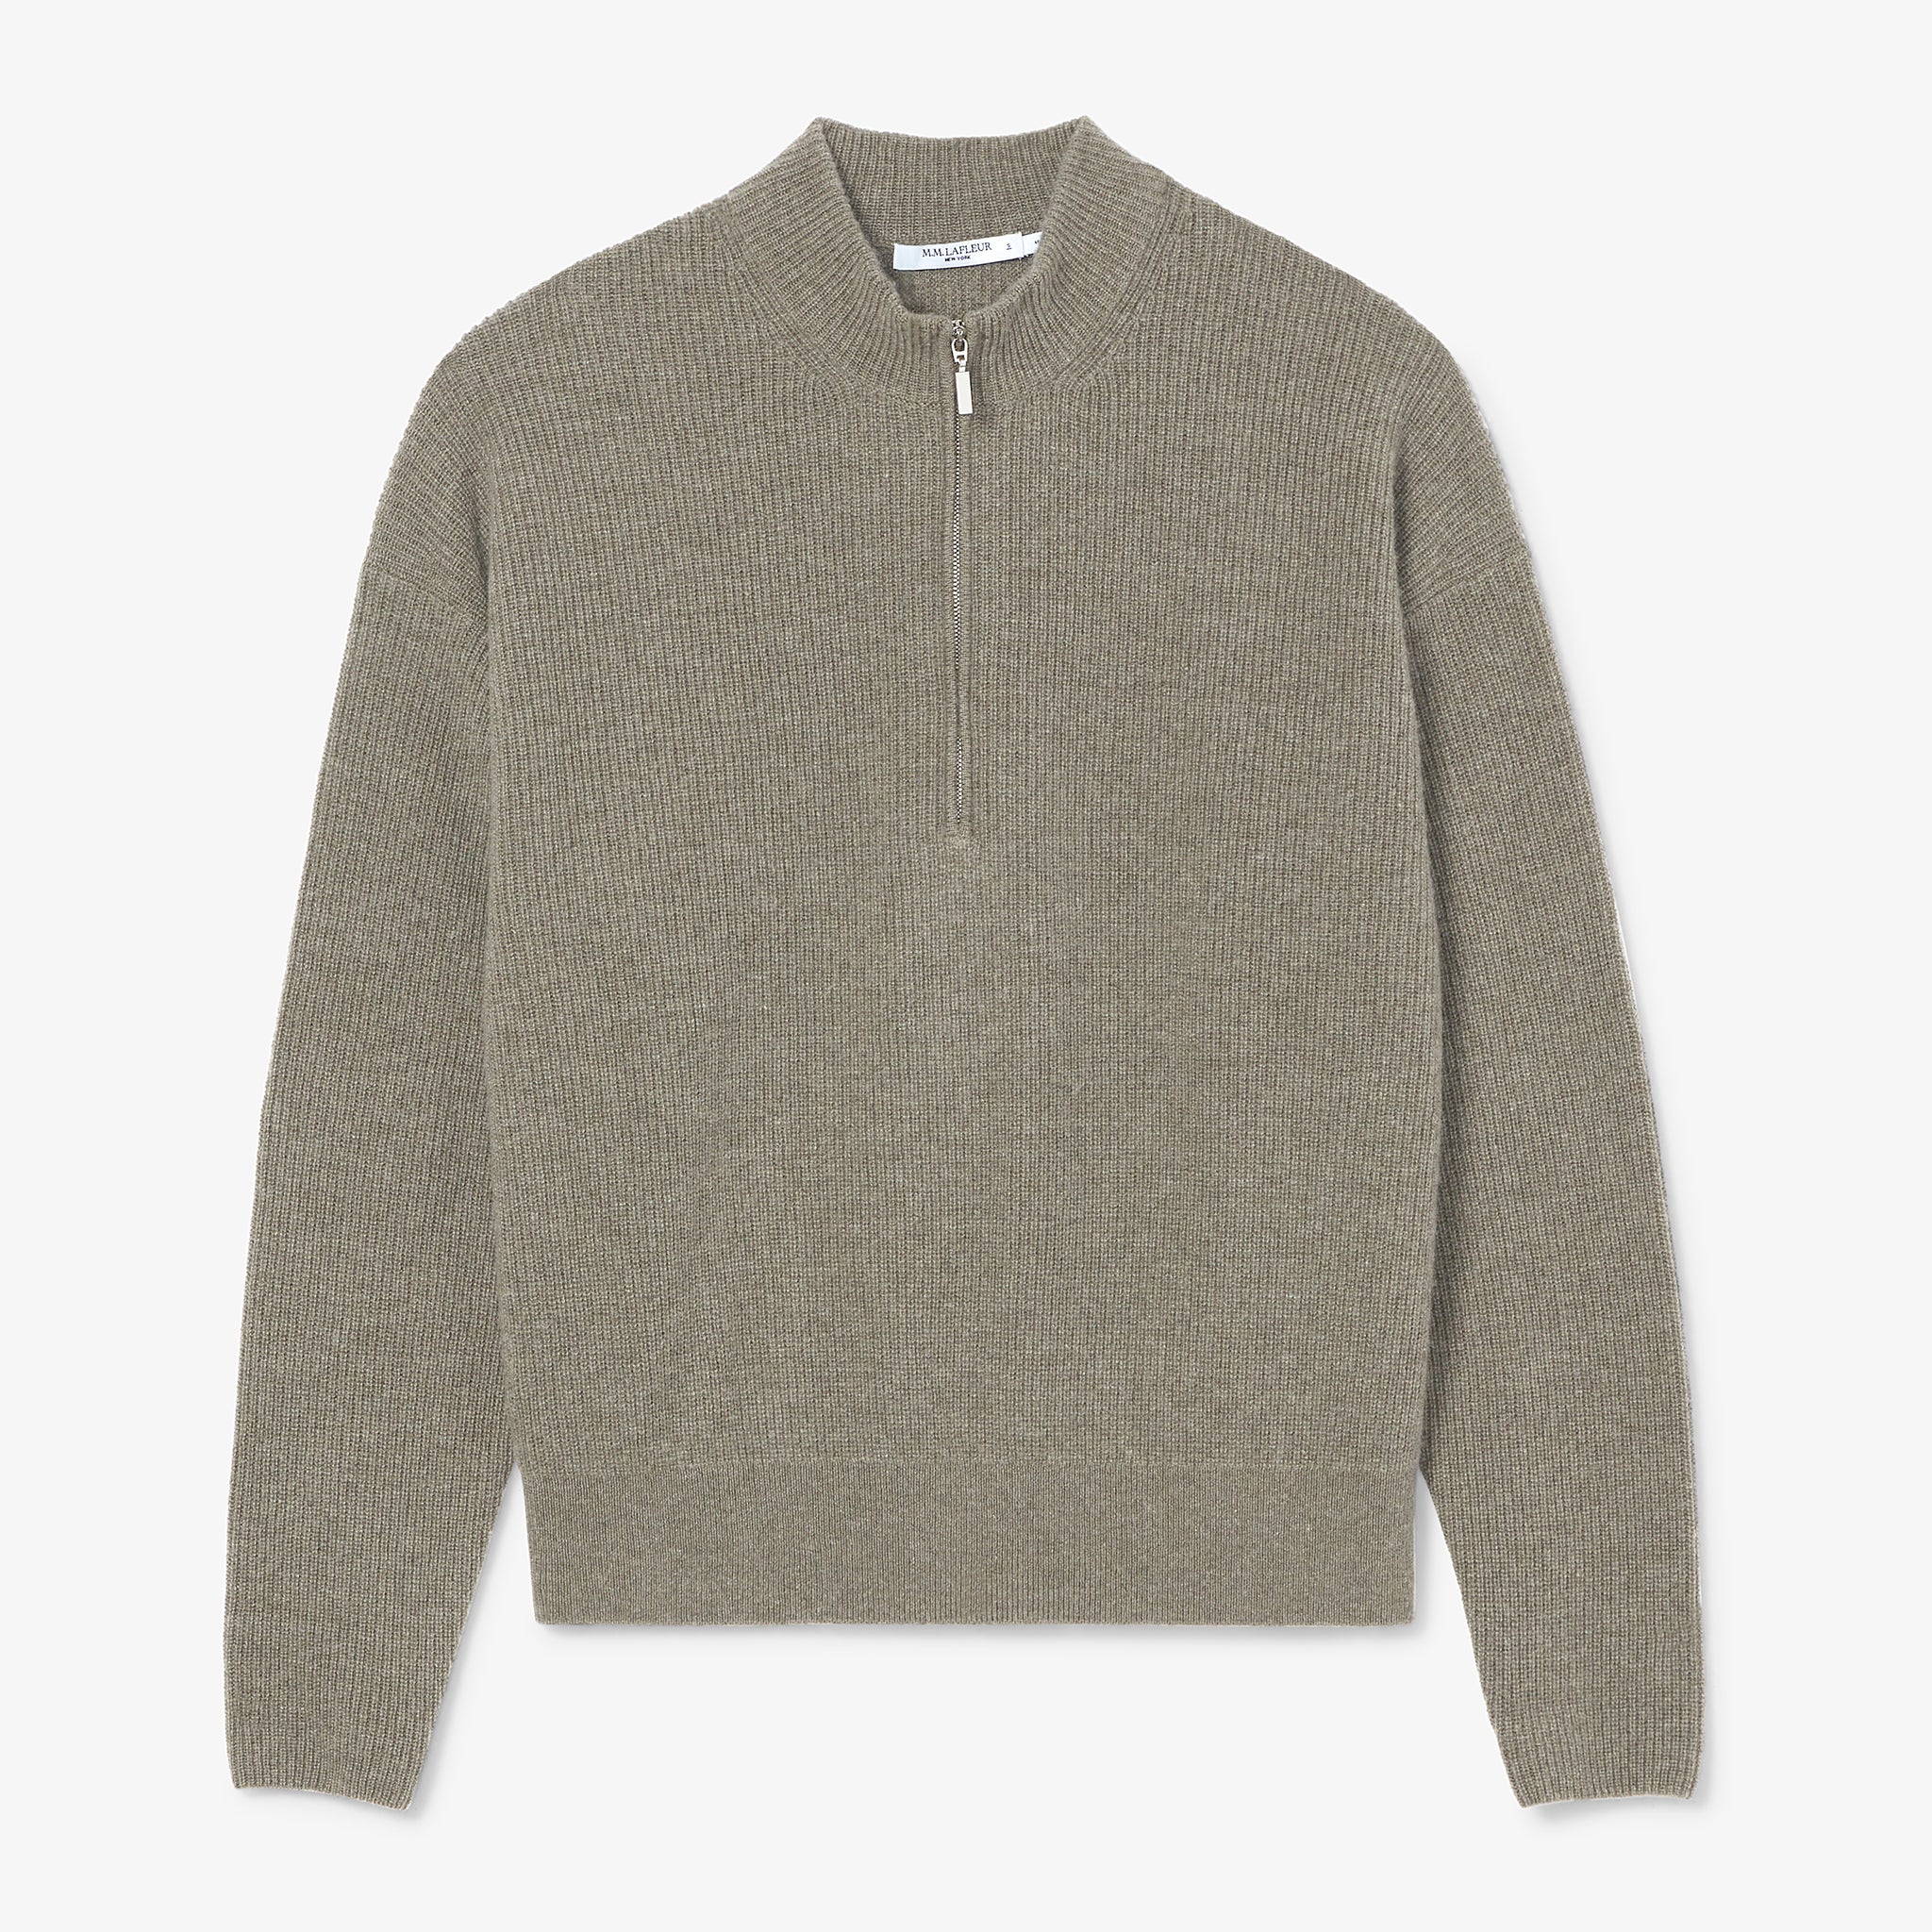 Packshot image of the cece sweater in dark moss